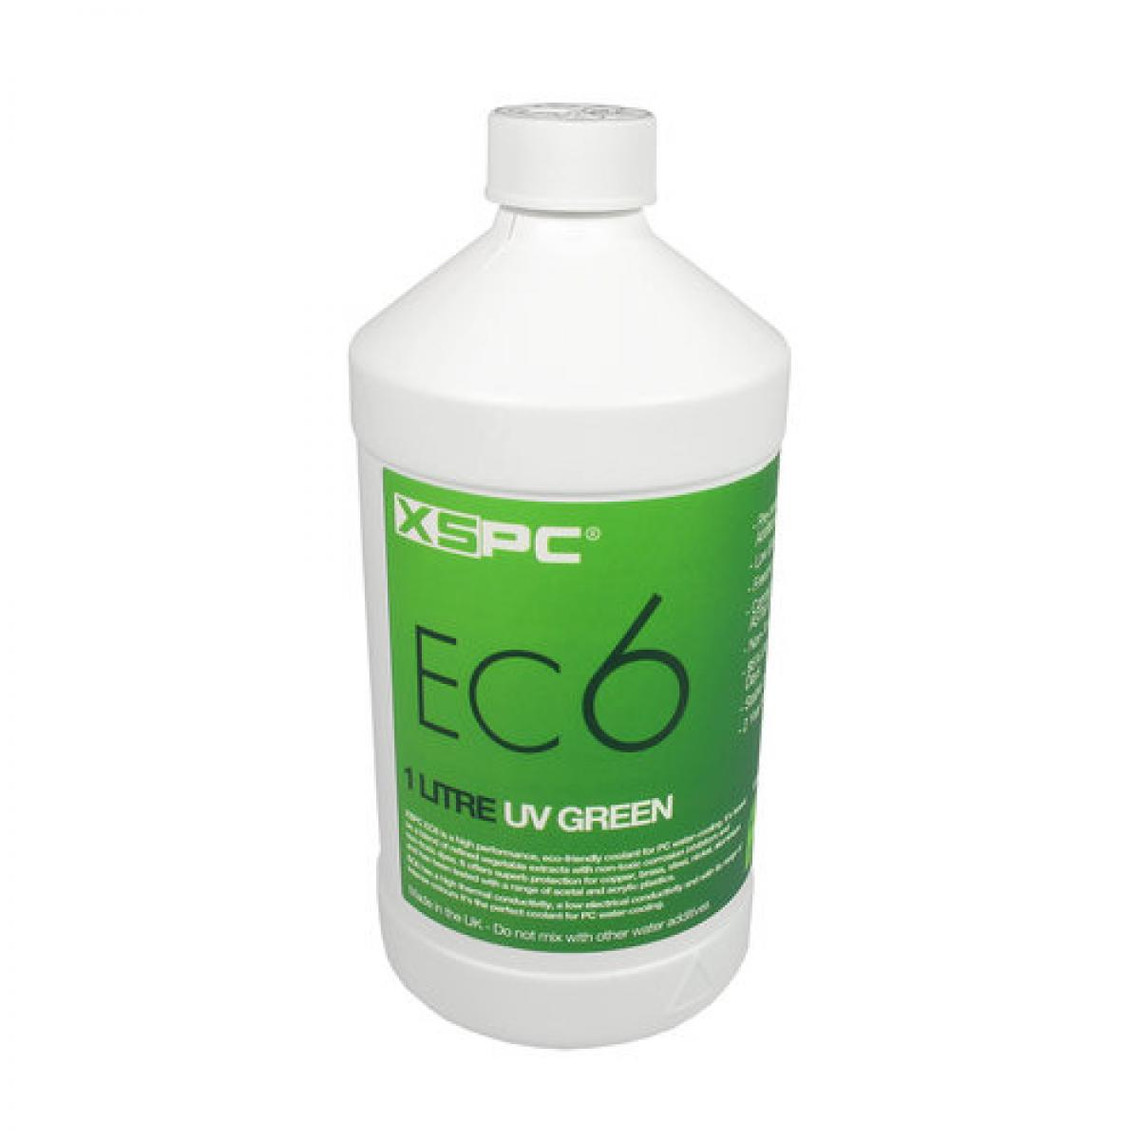 Xspc EC6 liquide de refroidissement